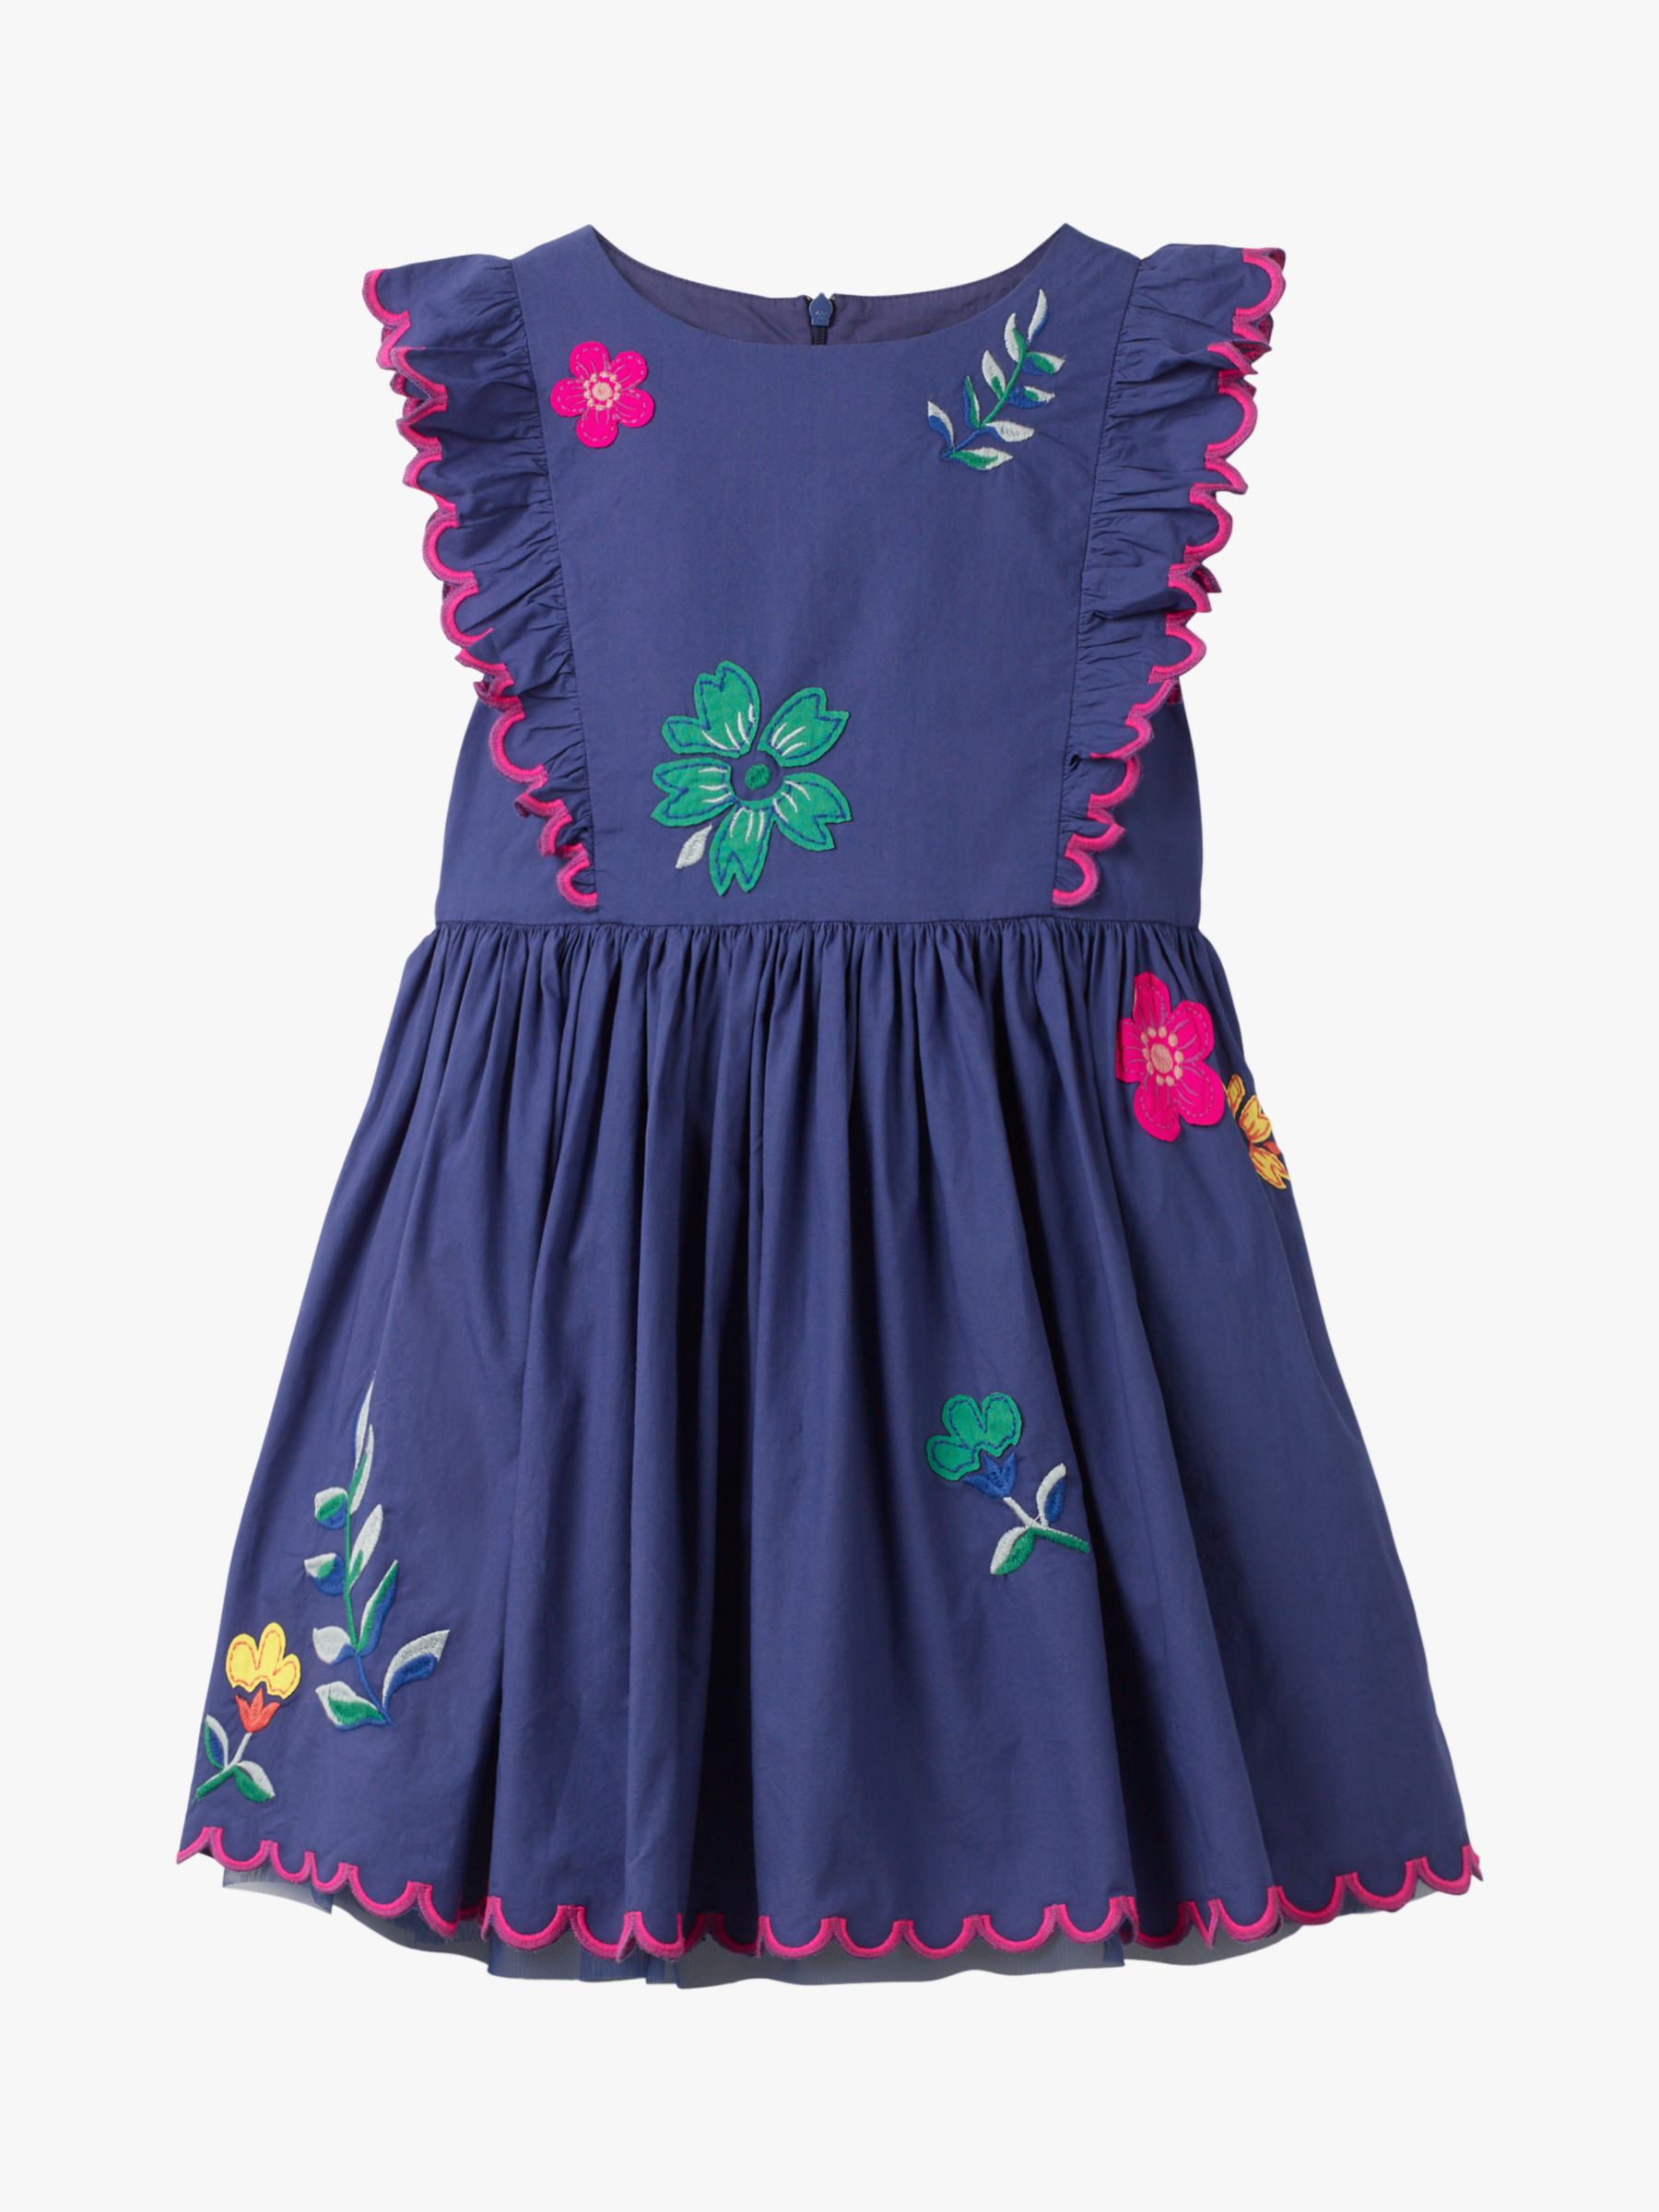 Mini Boden Girls' Floral Embroidered Scallop Dress, Dark Blue at John ...